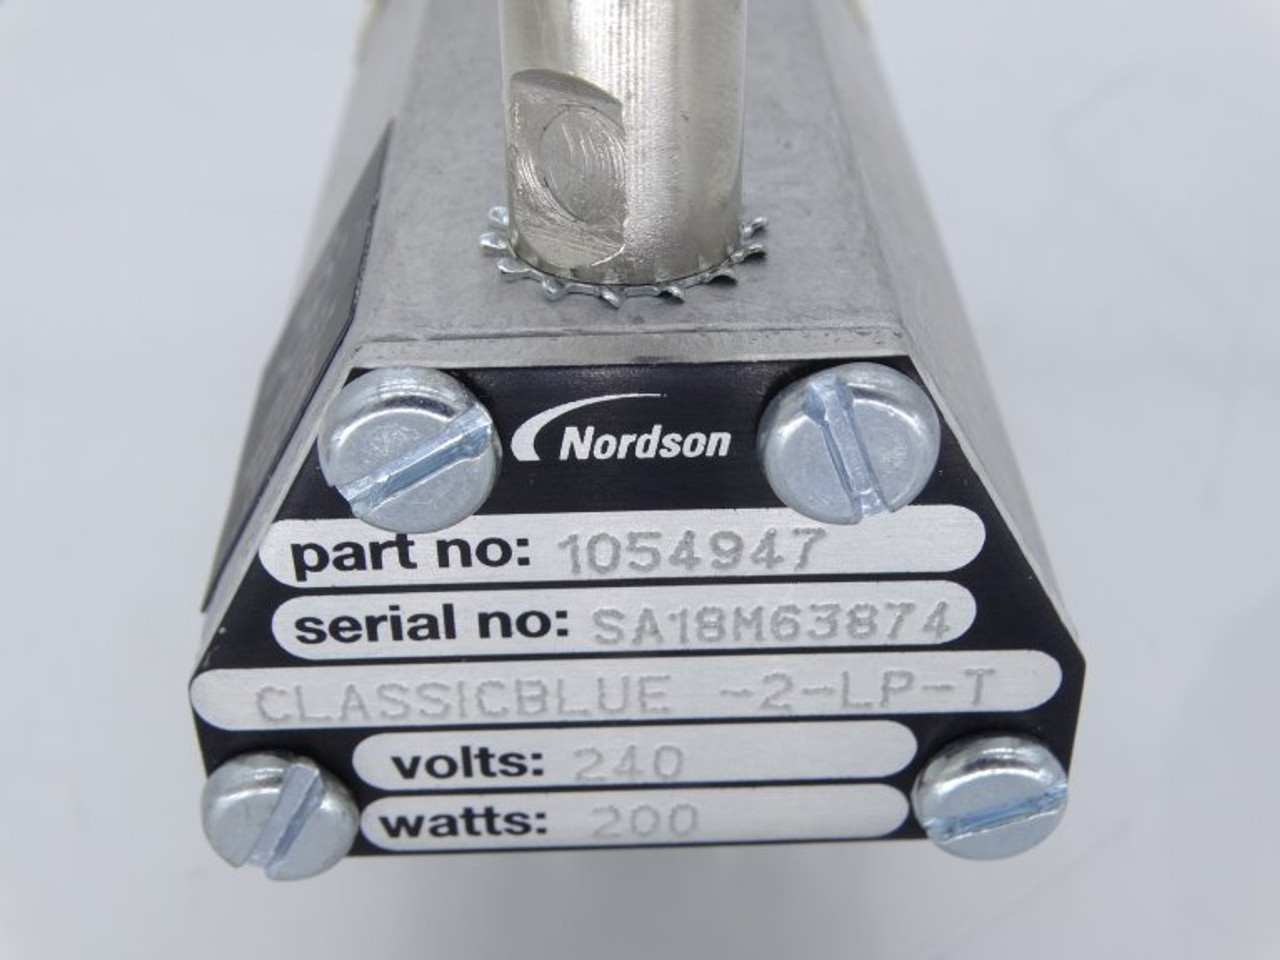 Nordson 1054947 Hot Glue Dispenser